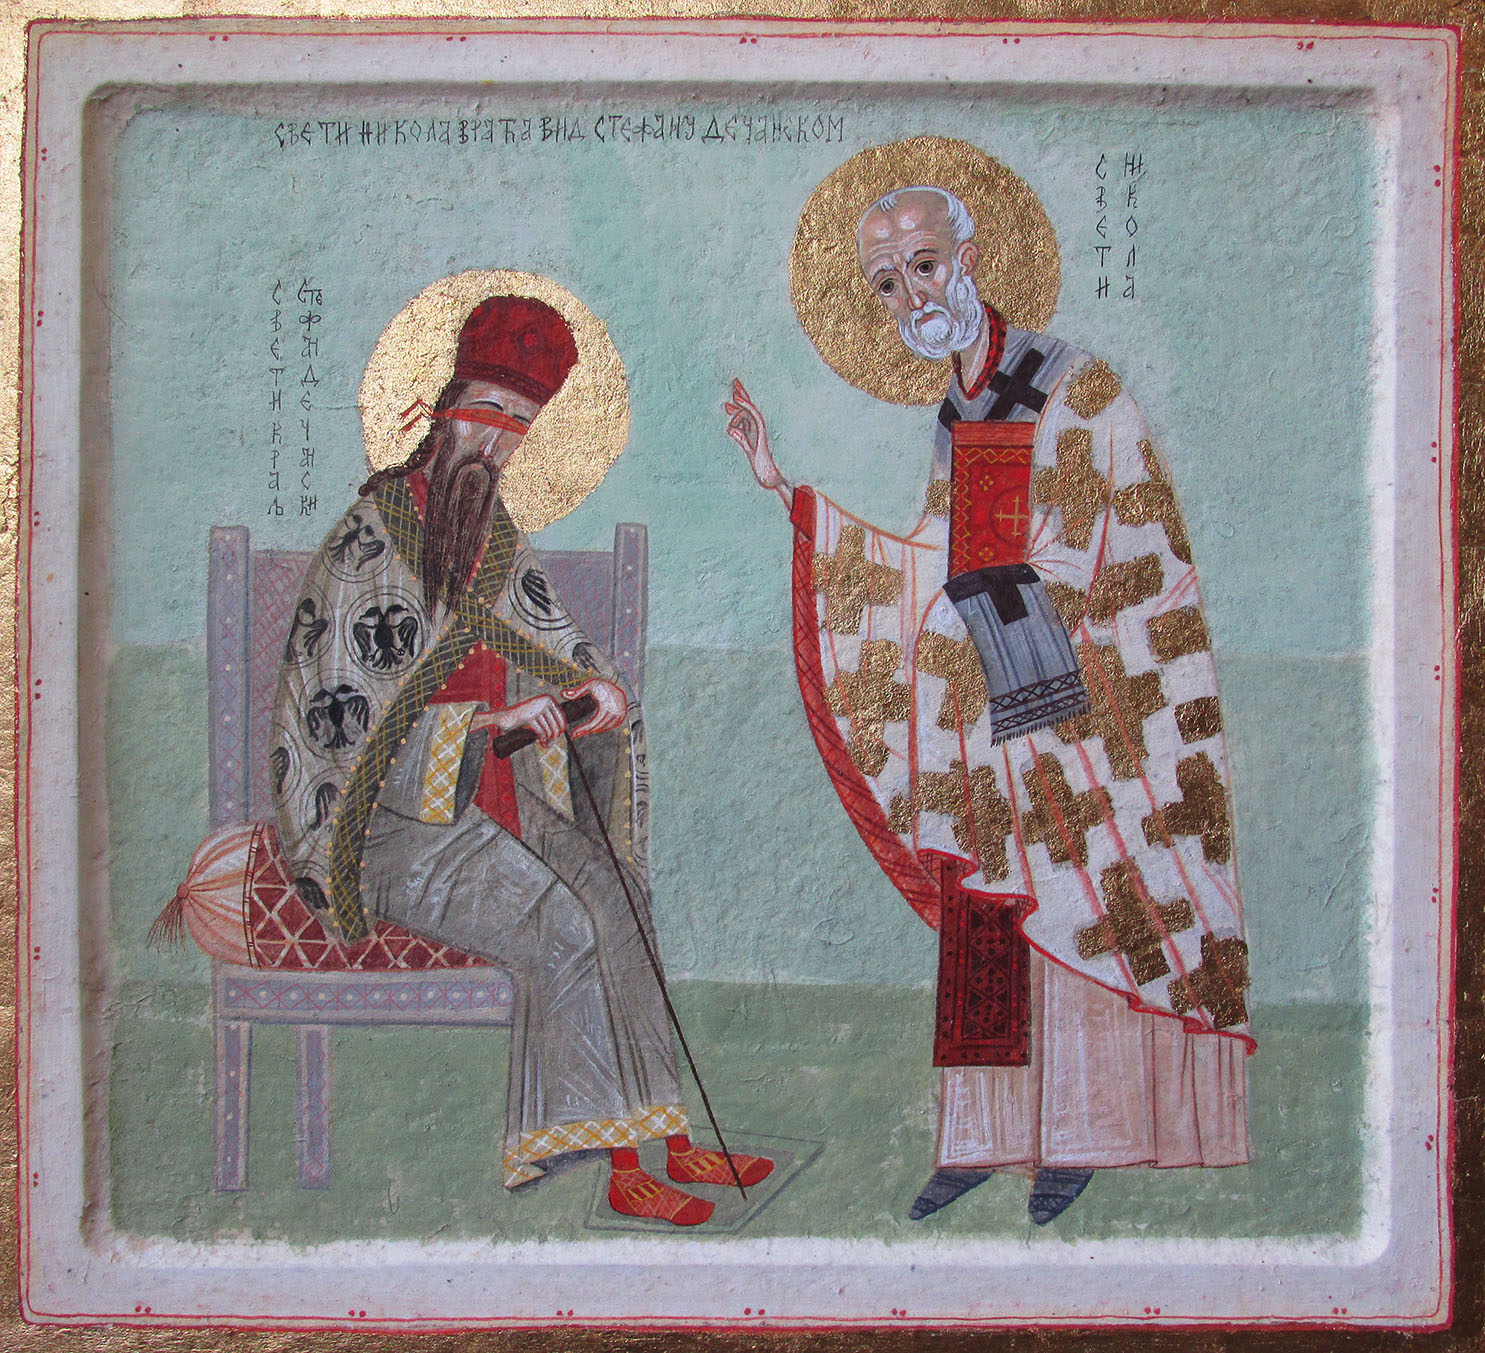 Saint Nicholas returns sight to Saint Stephen of Decani